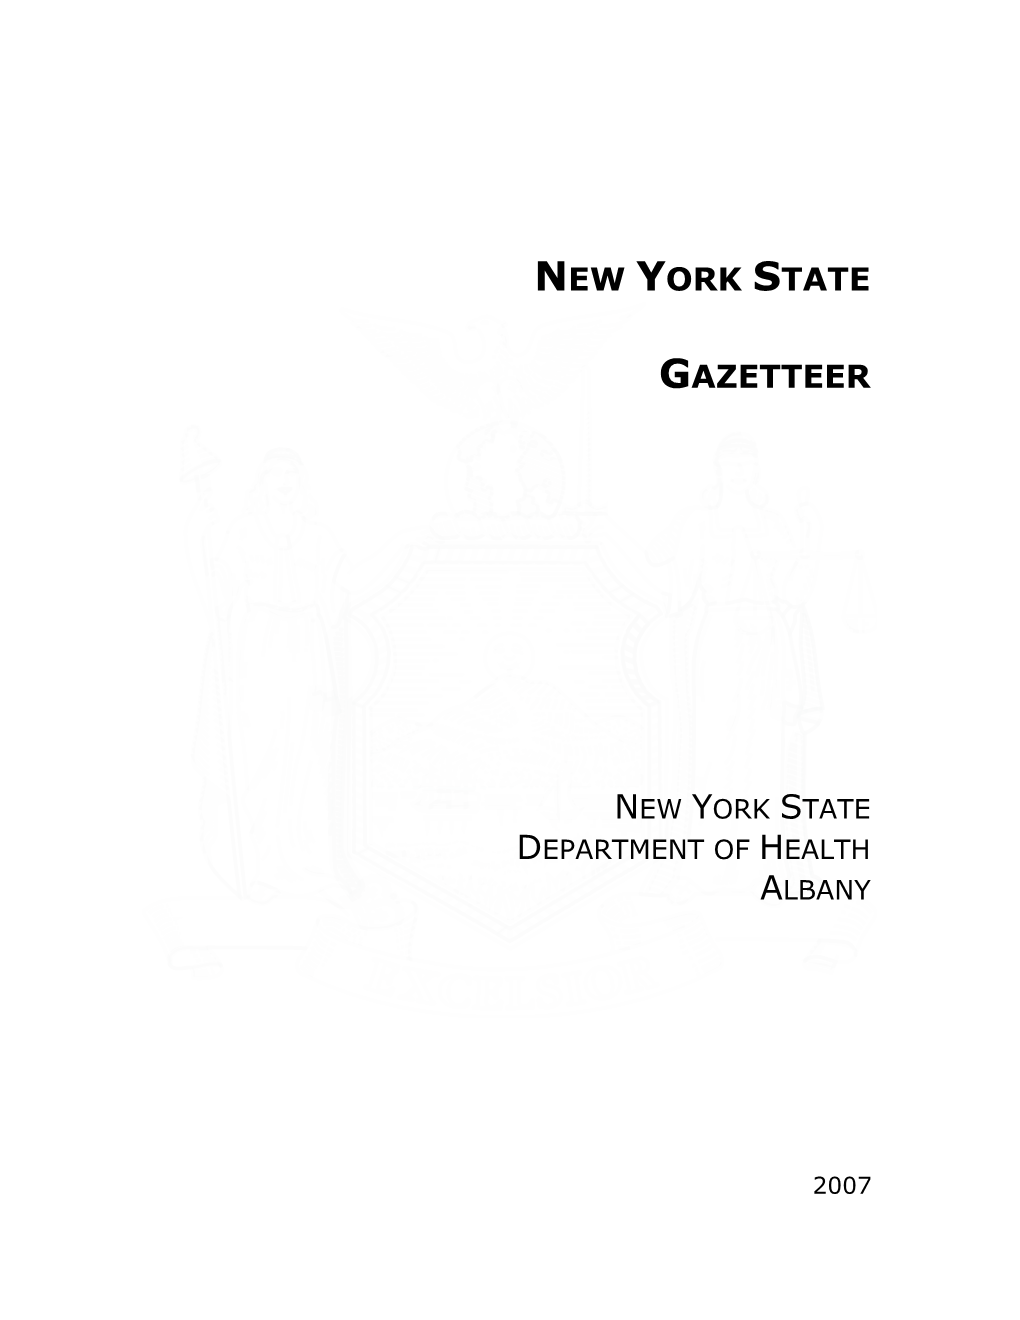 New York State Gazetteer